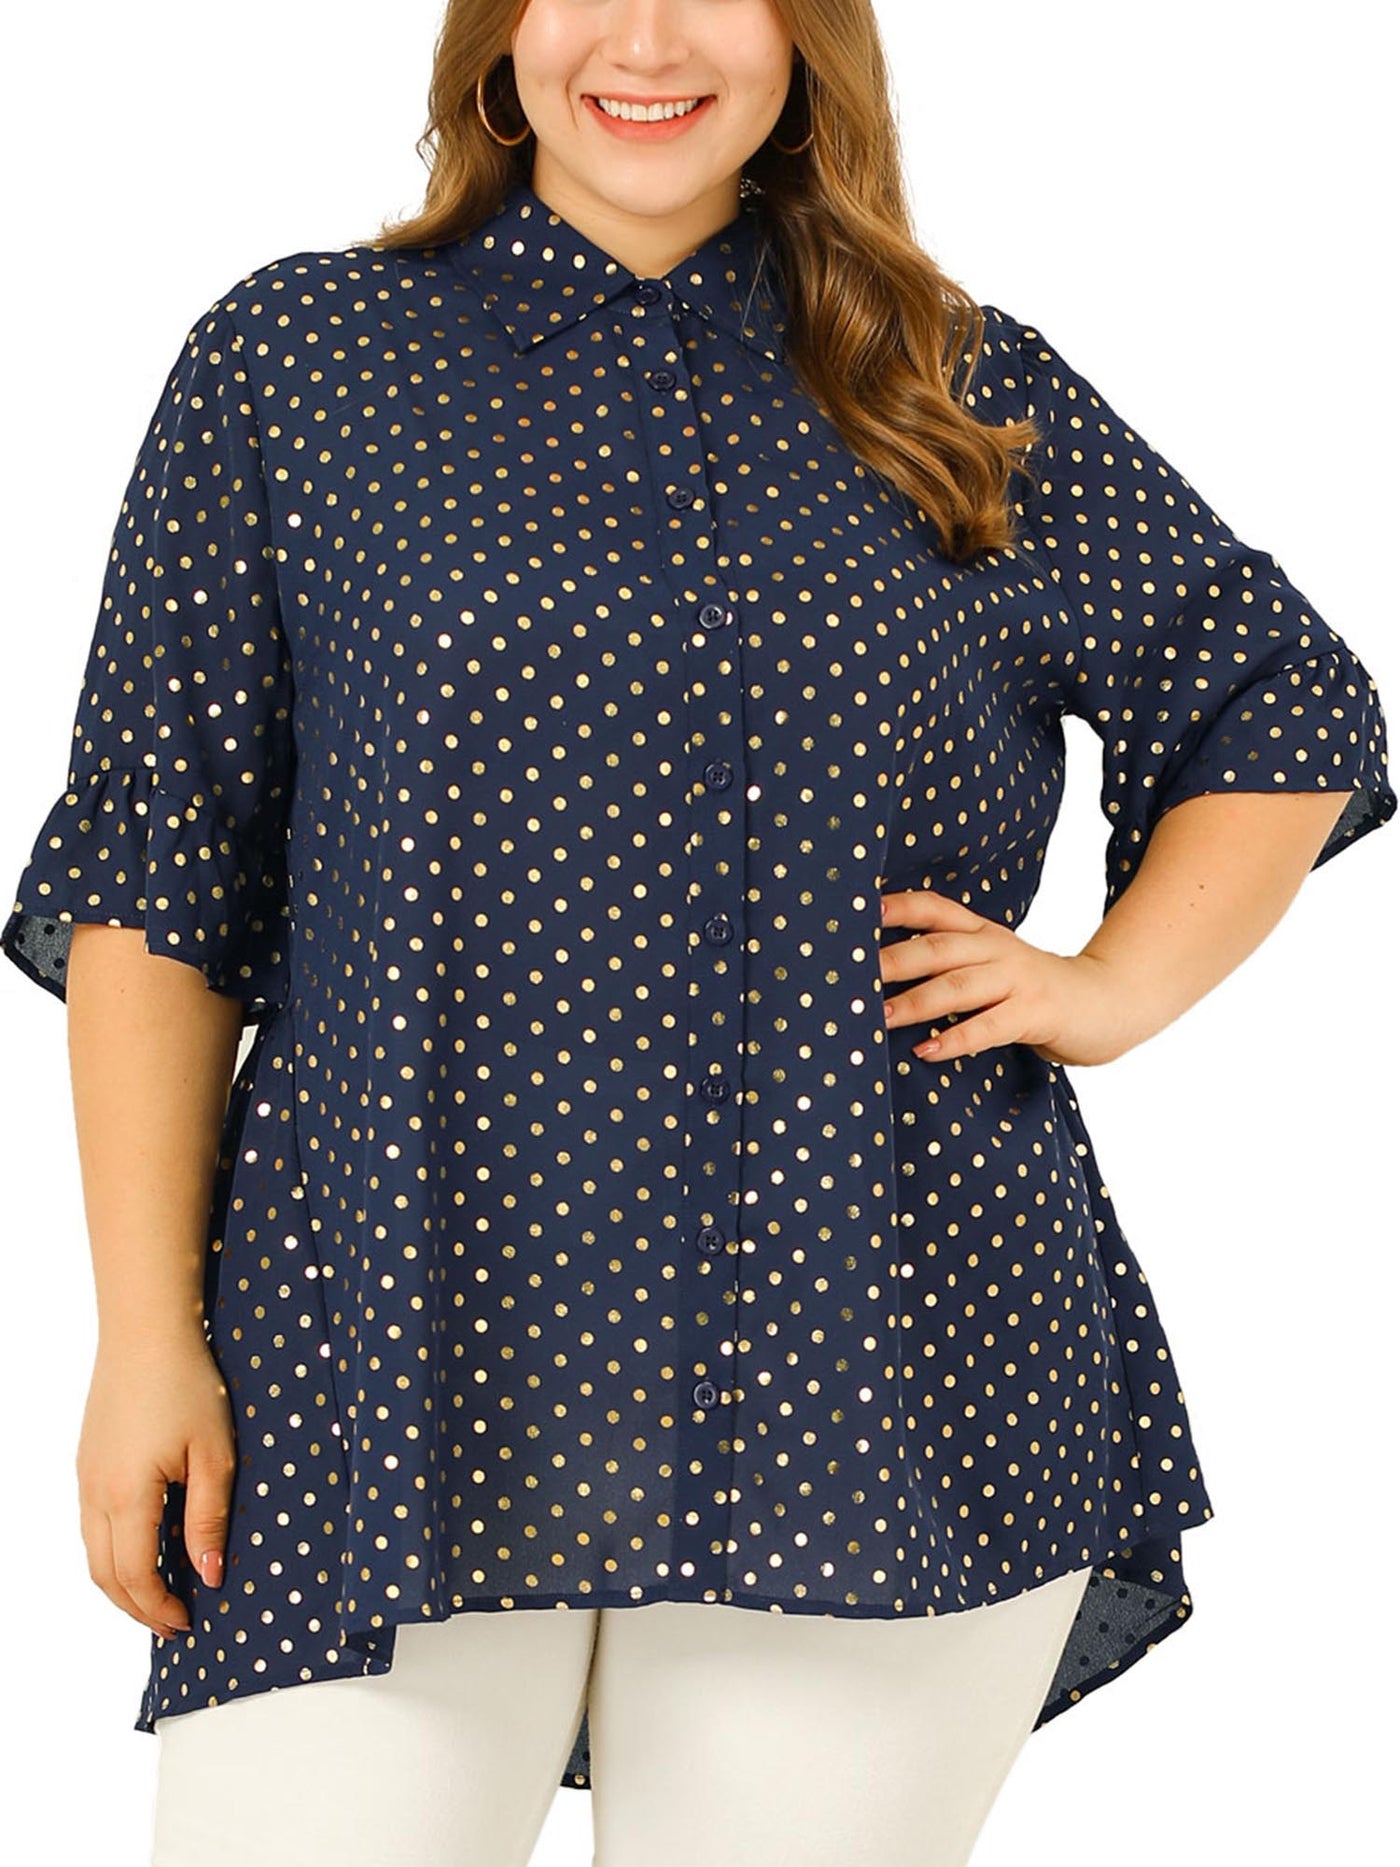 Bublédon Women's Plus Size Blouse Ruffle Short Sleeve Shirt Polka Dot Tops Chiffon Blouses Tunic